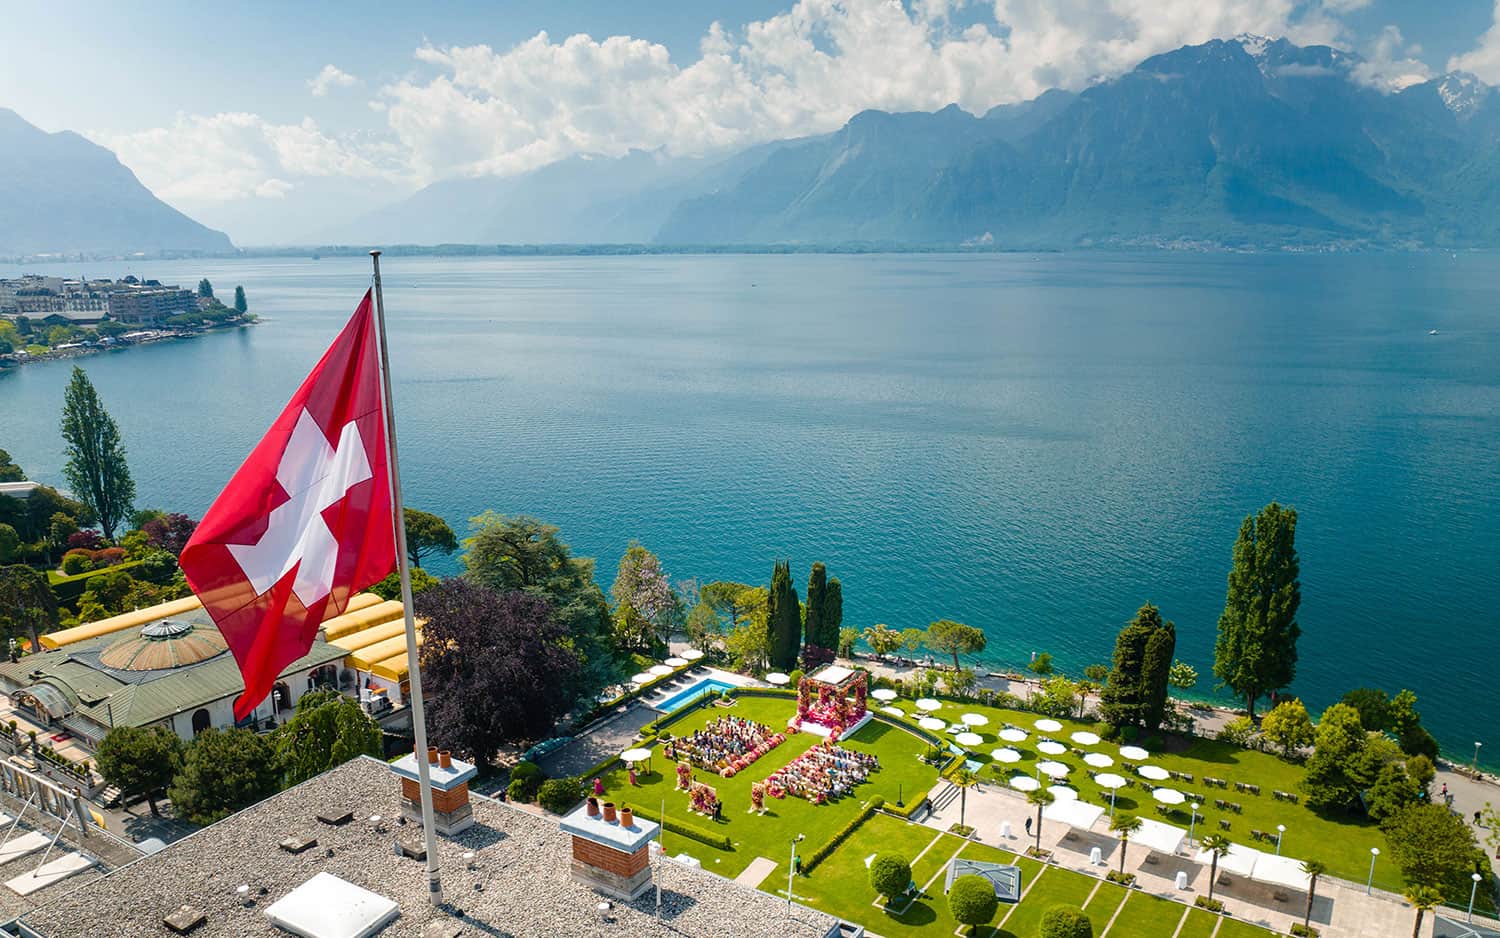 Fairmont Montreux wedding at Lake Geneva in Switzerland